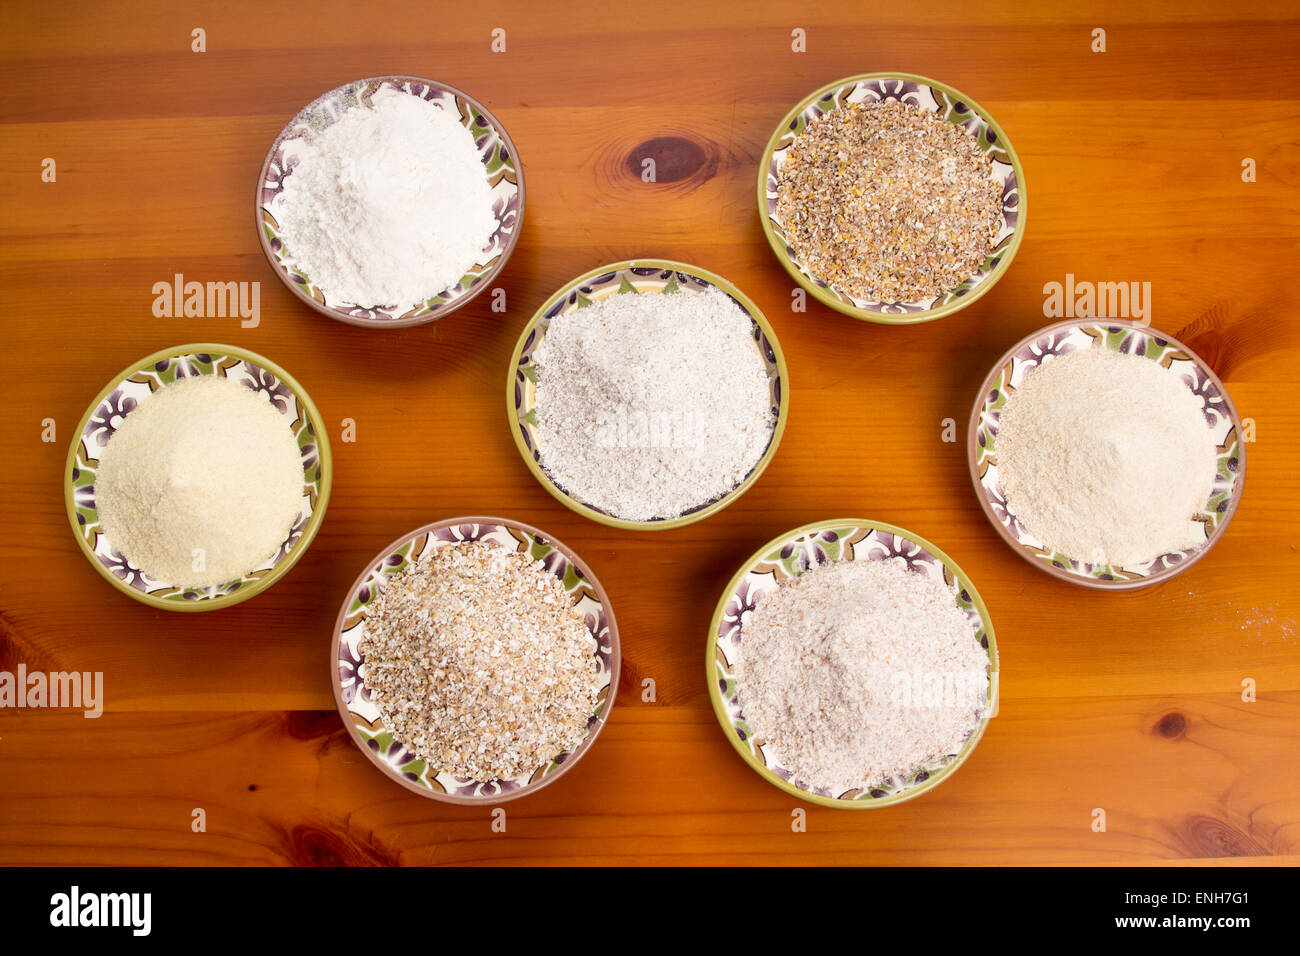 Various kinds of flour and grains including bread flour, ten grain cereal, kamut flour, whole wheat flour, oat bran & rye flour Stock Photo